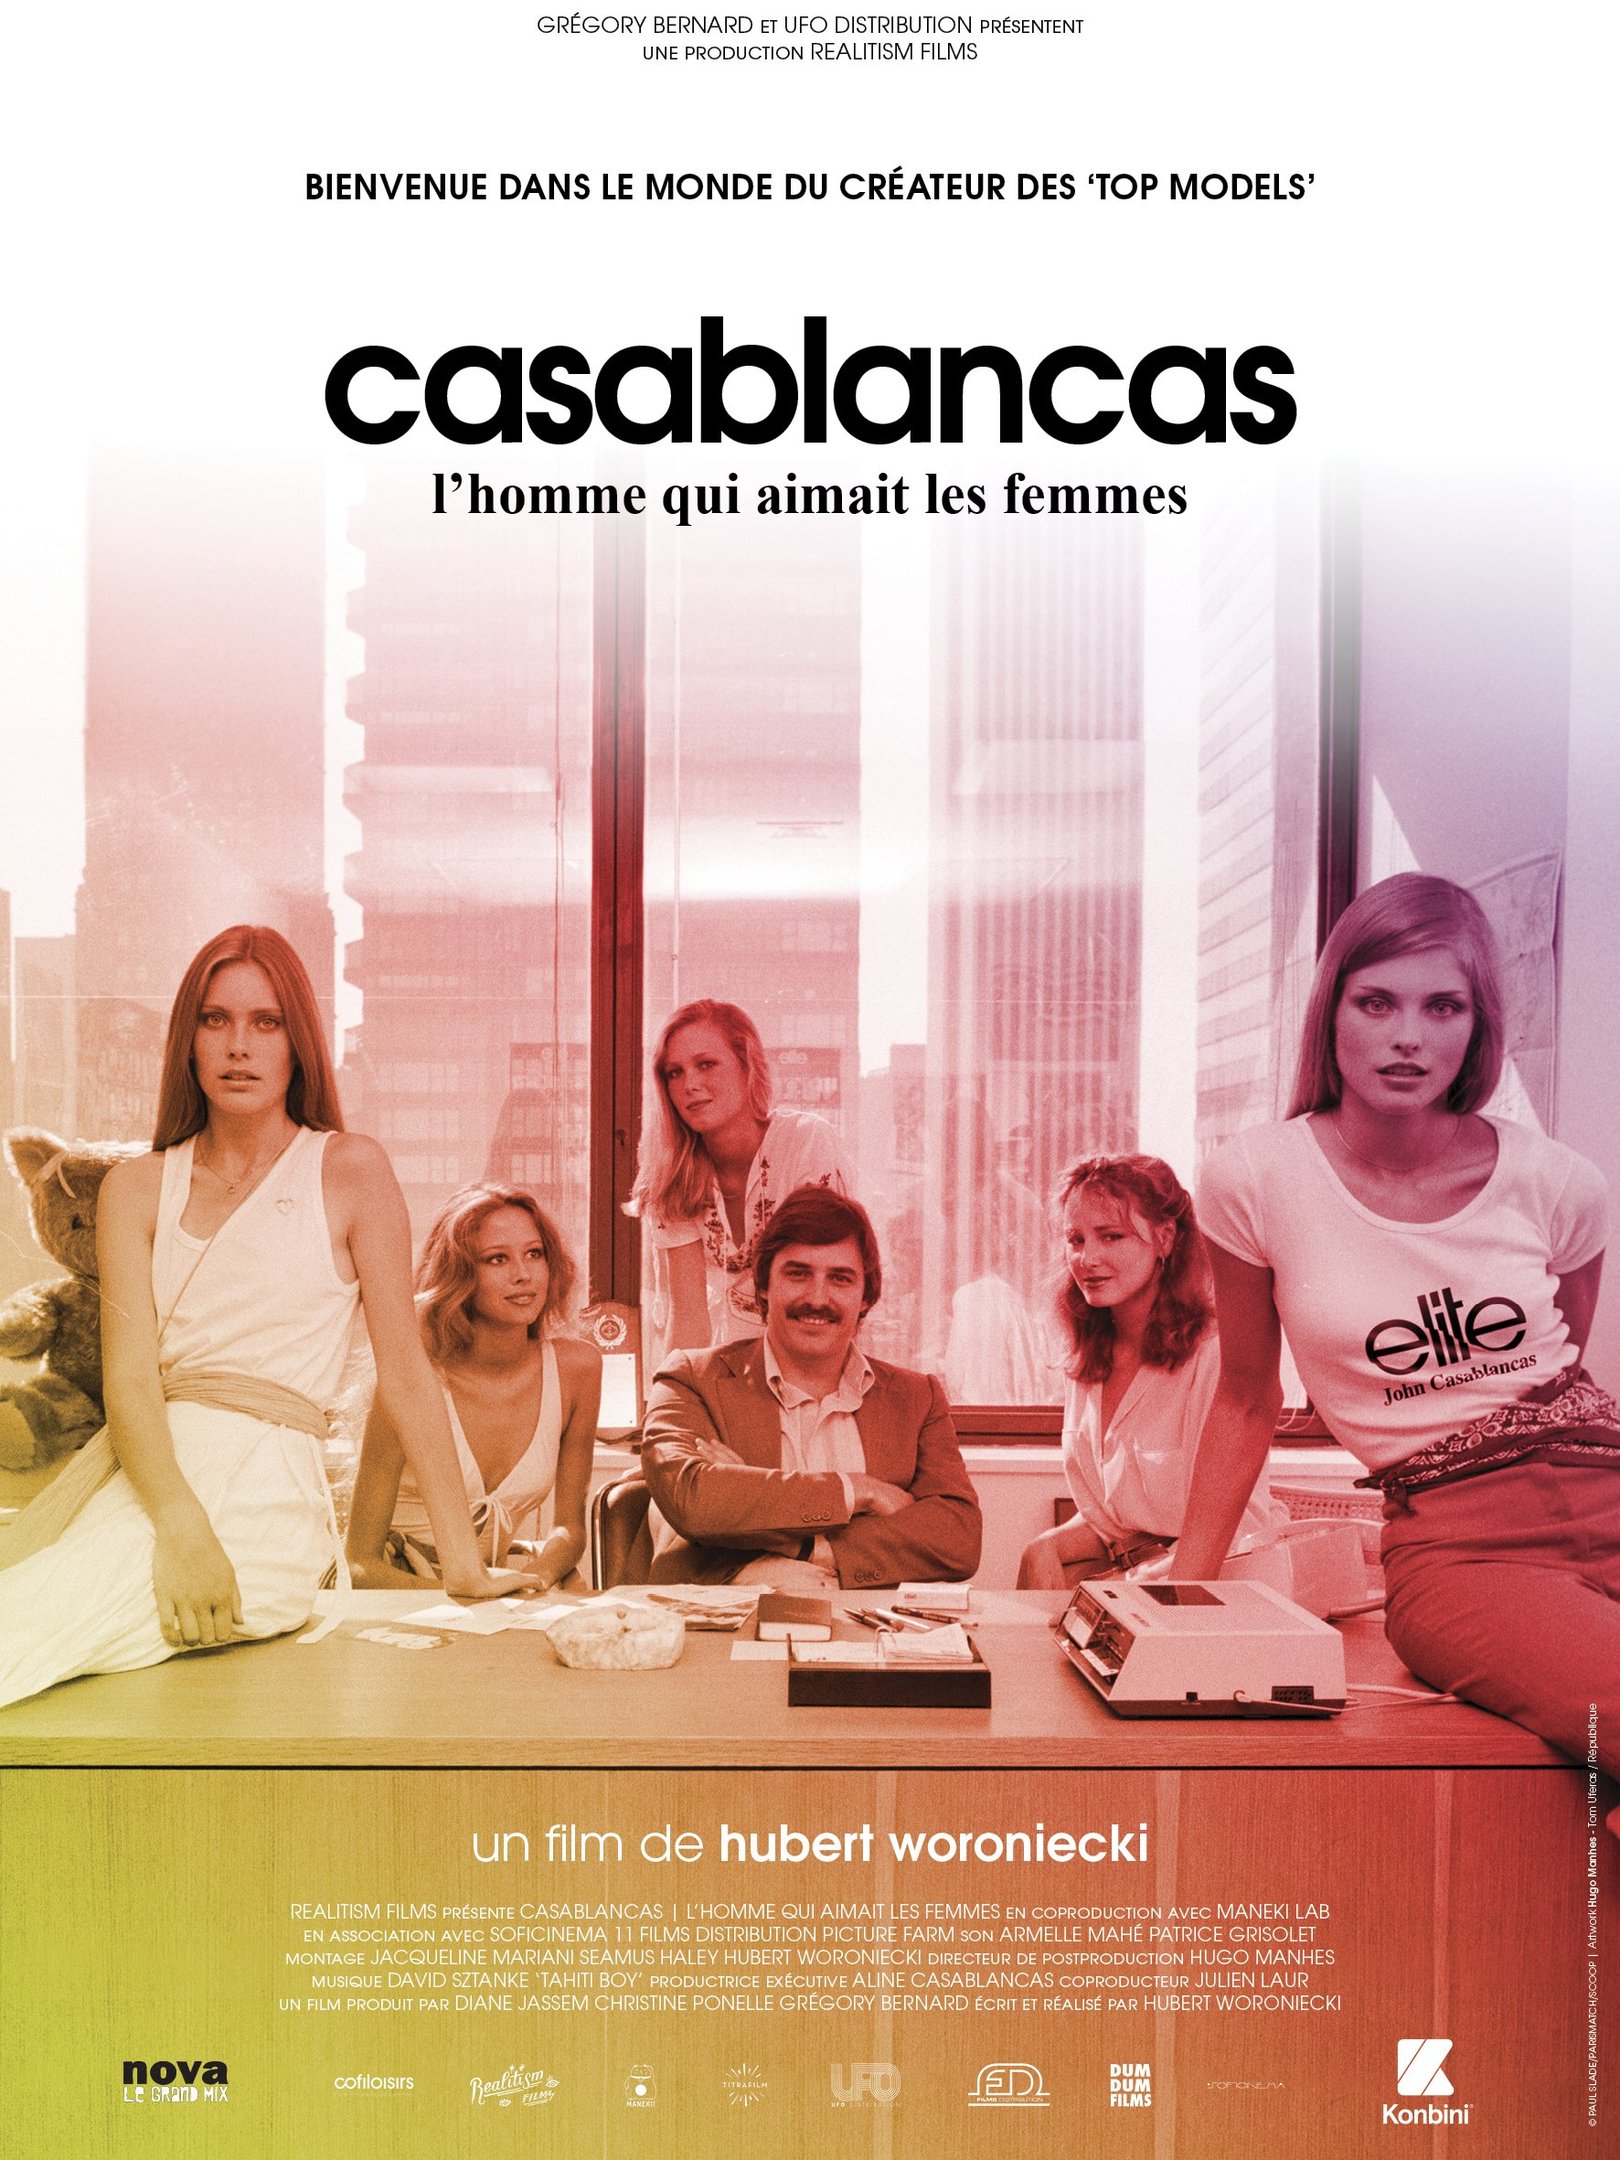 It girls - Casablancas - Séries e filmes - Inverno - Street Style - https://stealthelook.com.br